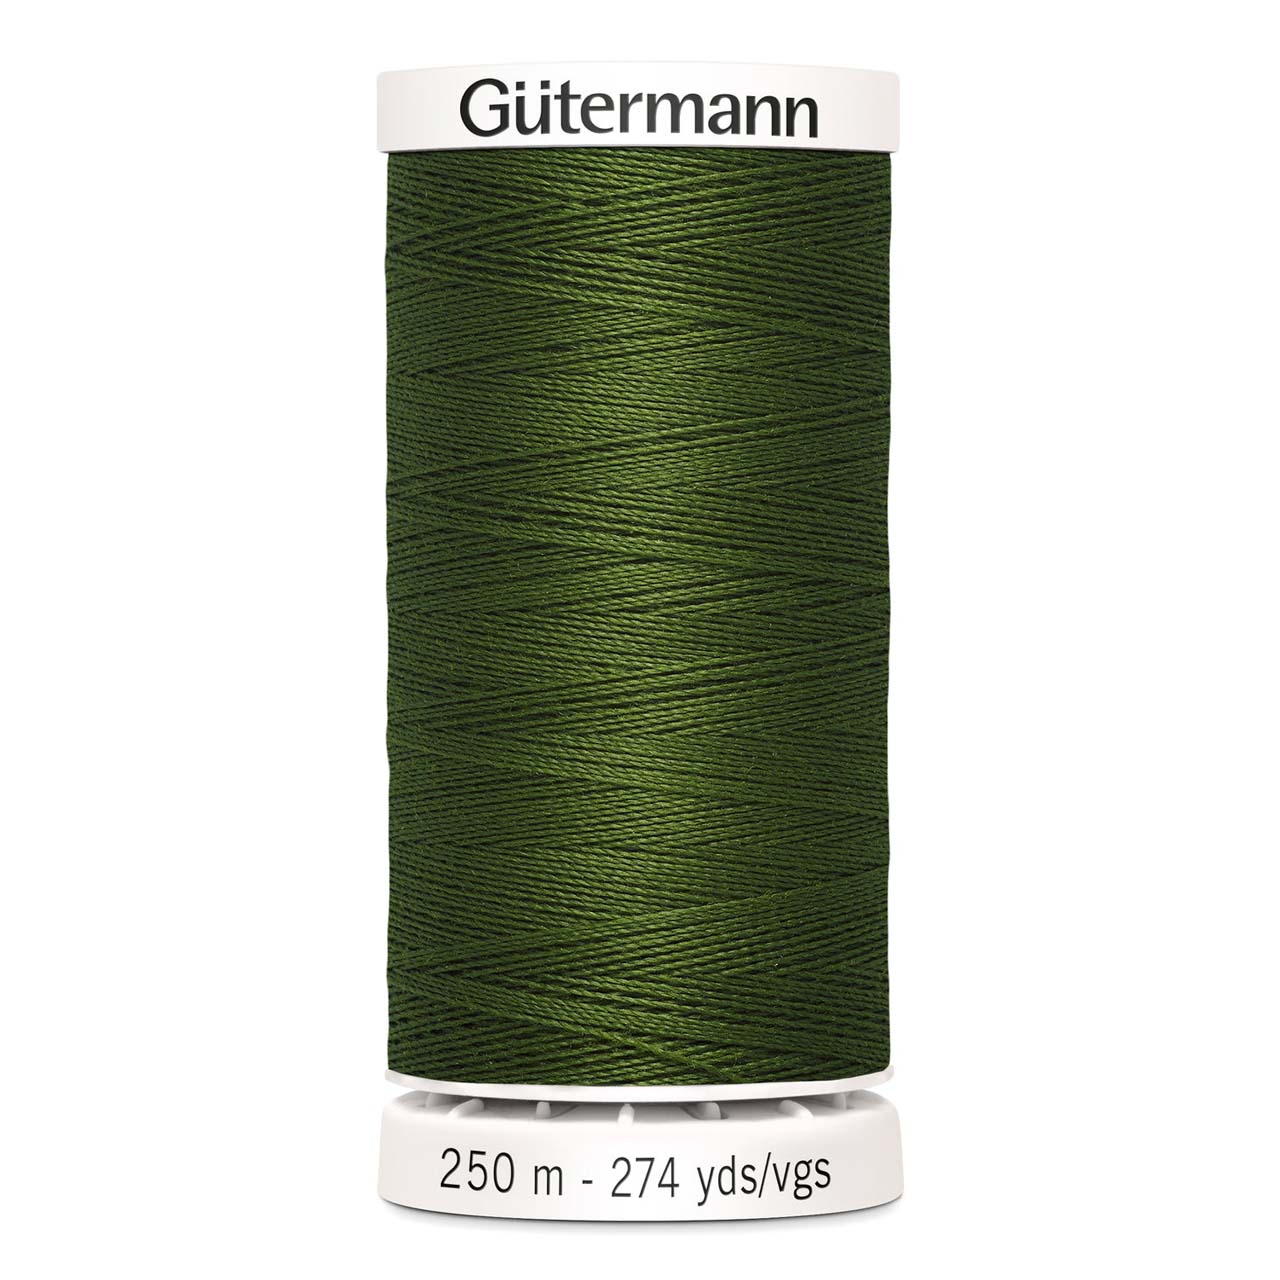 Gutermann thread 585 sewing thread 250 metres